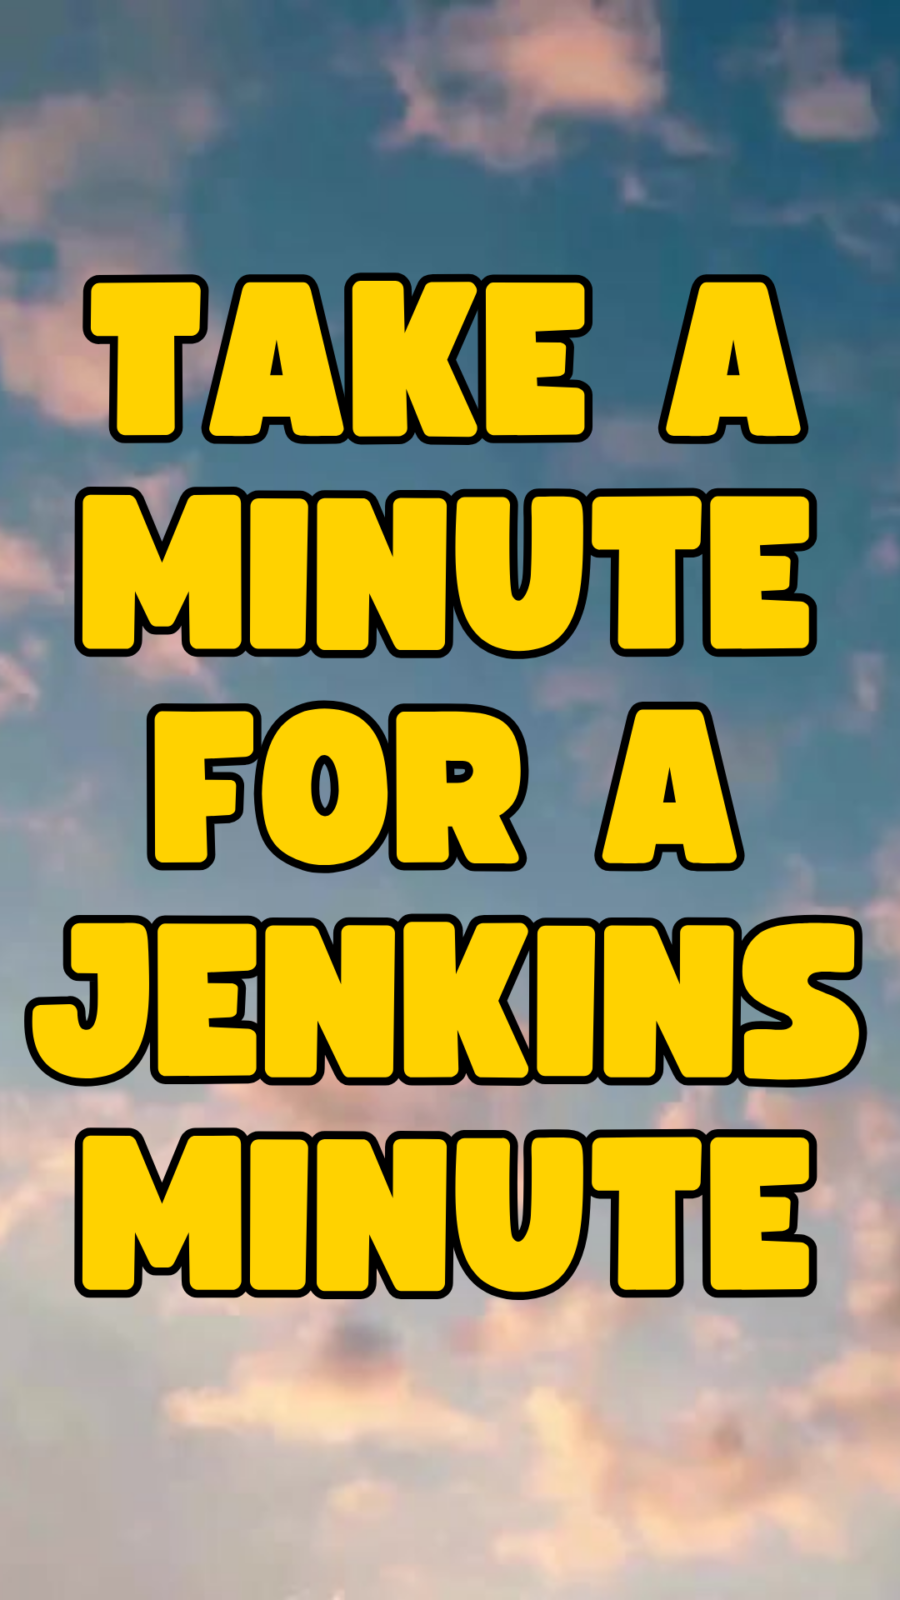 A Jenkins Minute